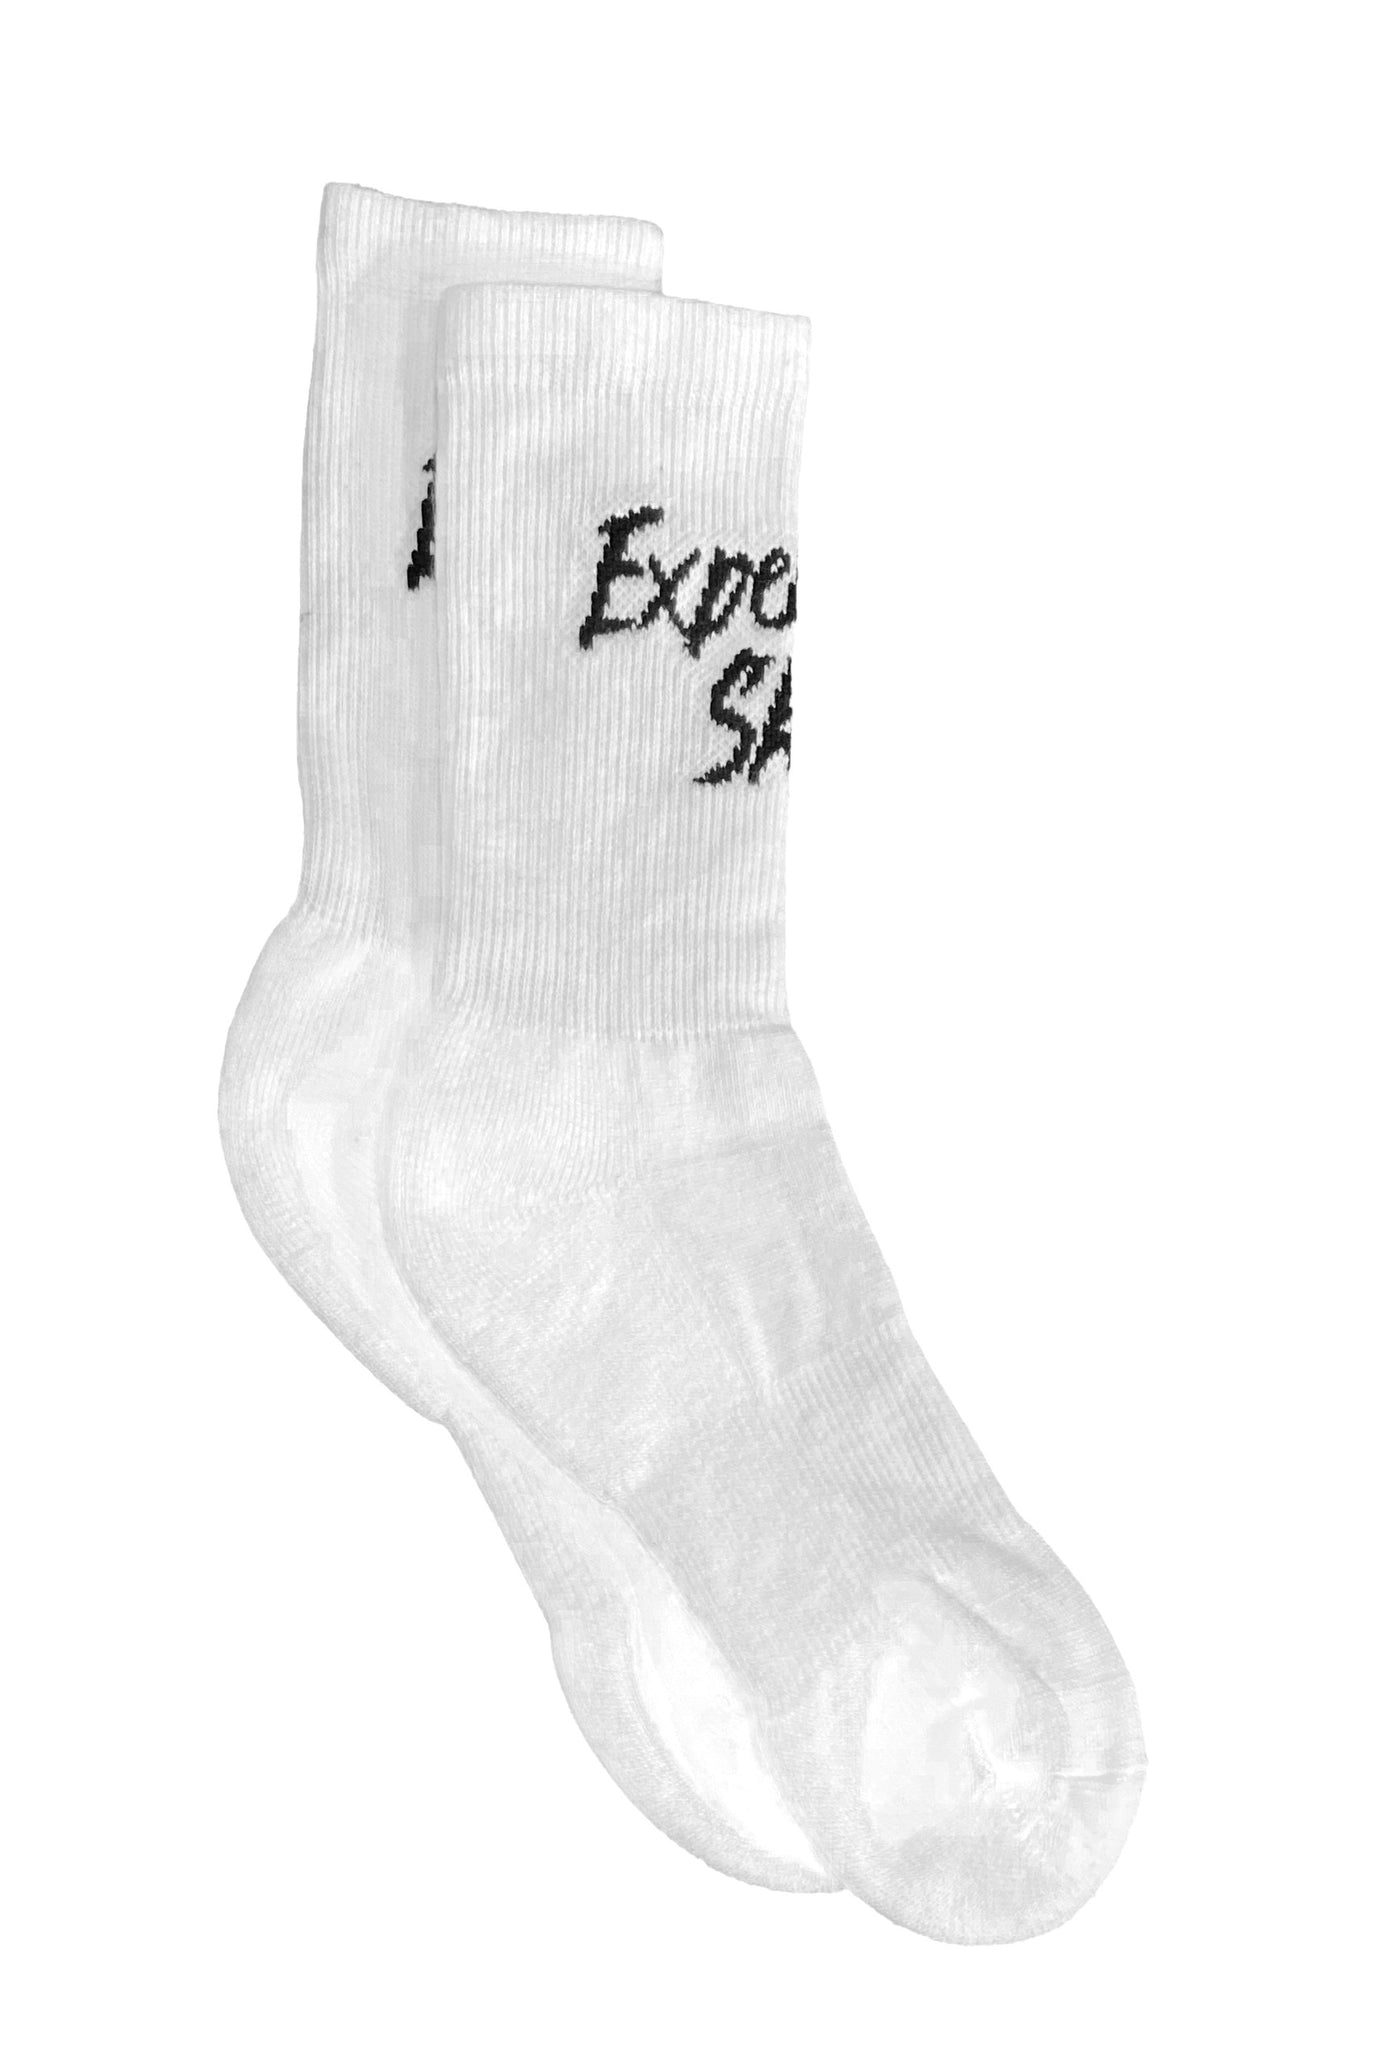 jaksonbd Expensive Skin Socks